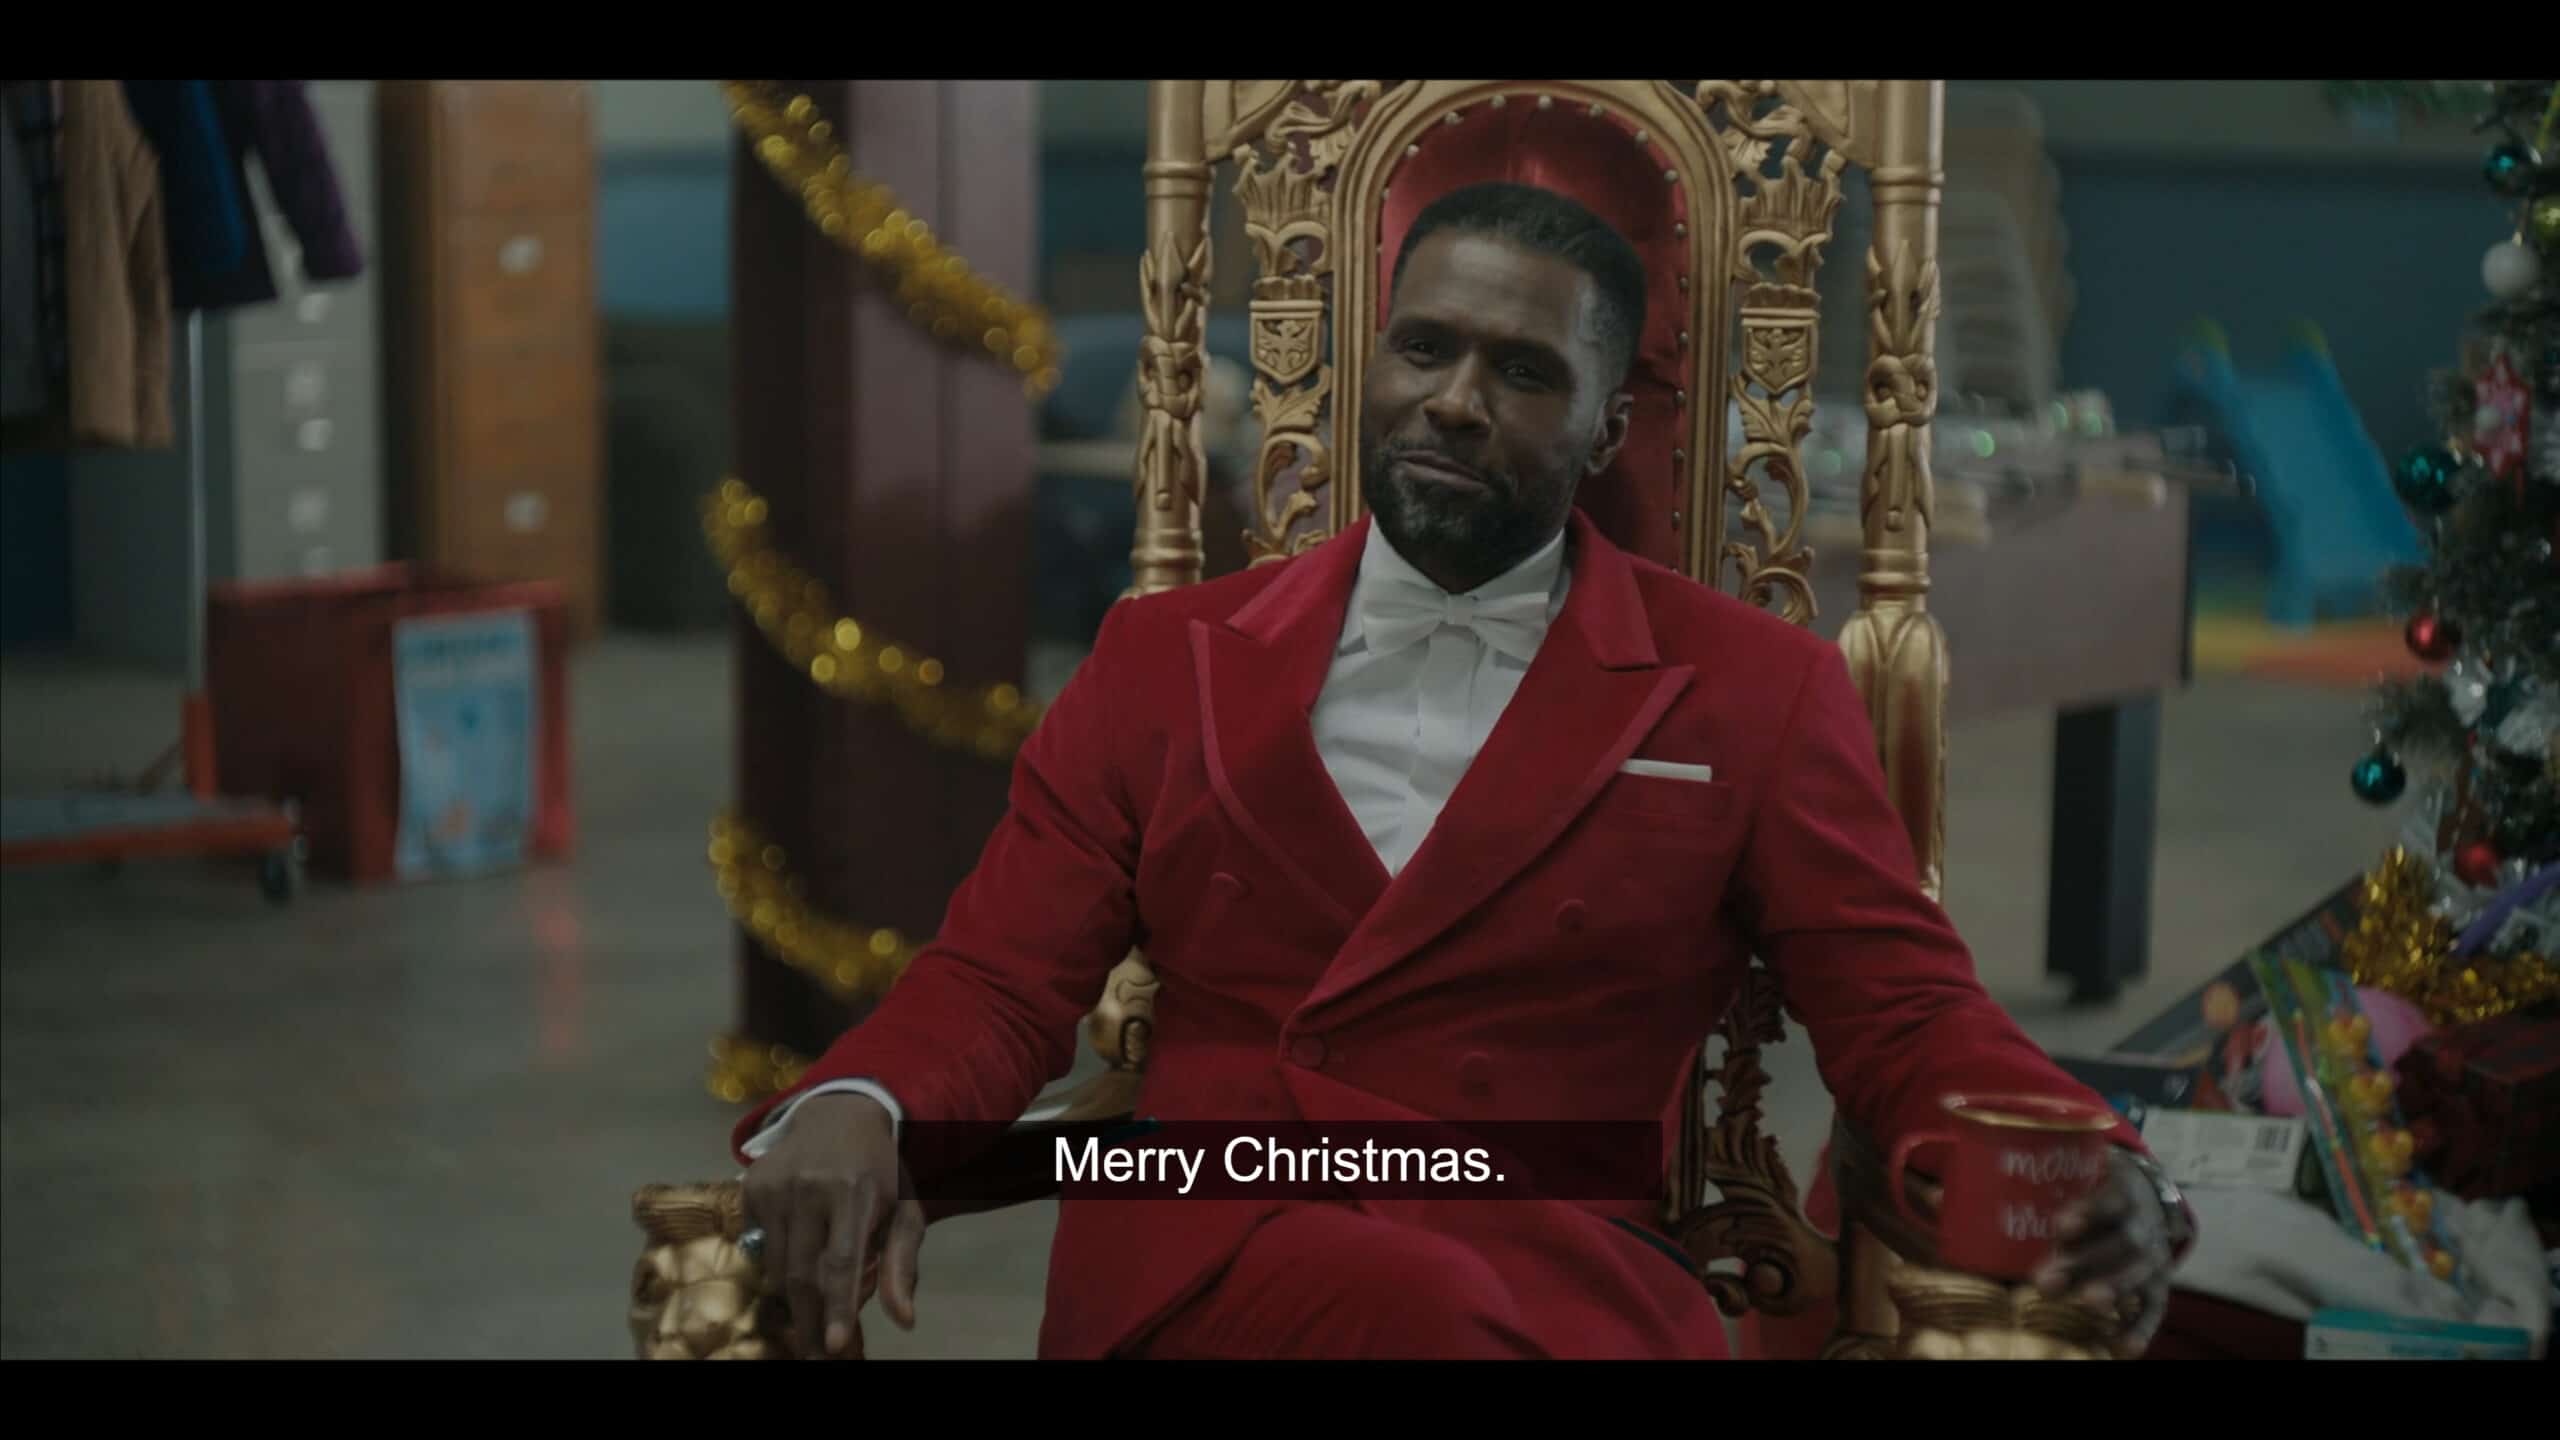 Otis aka Douda, sitting in a throne, wishing people Merry Christmas